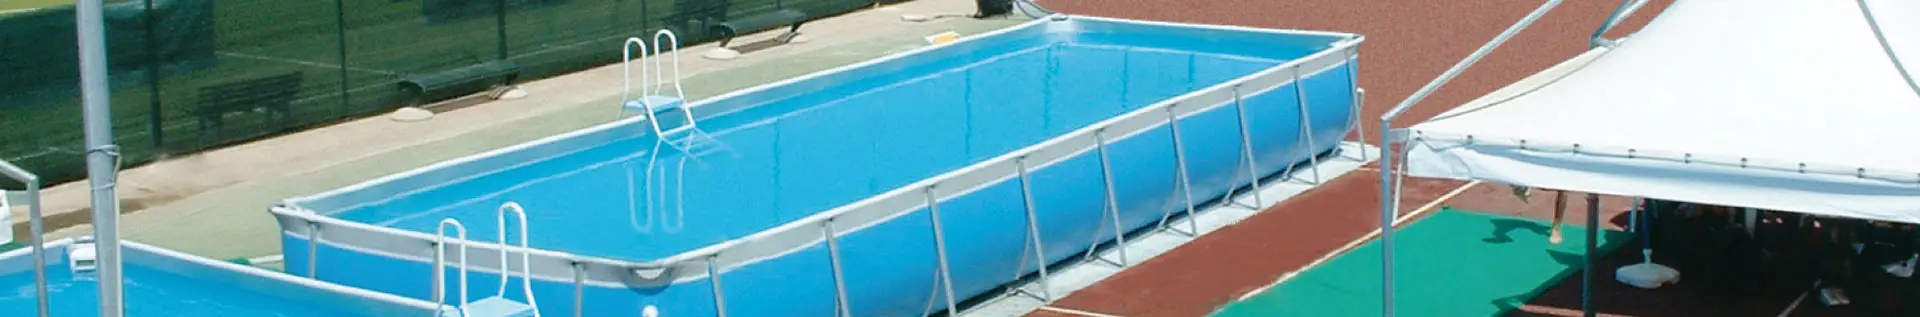 ANTILLA model swimming pool - Cod. ANT3555